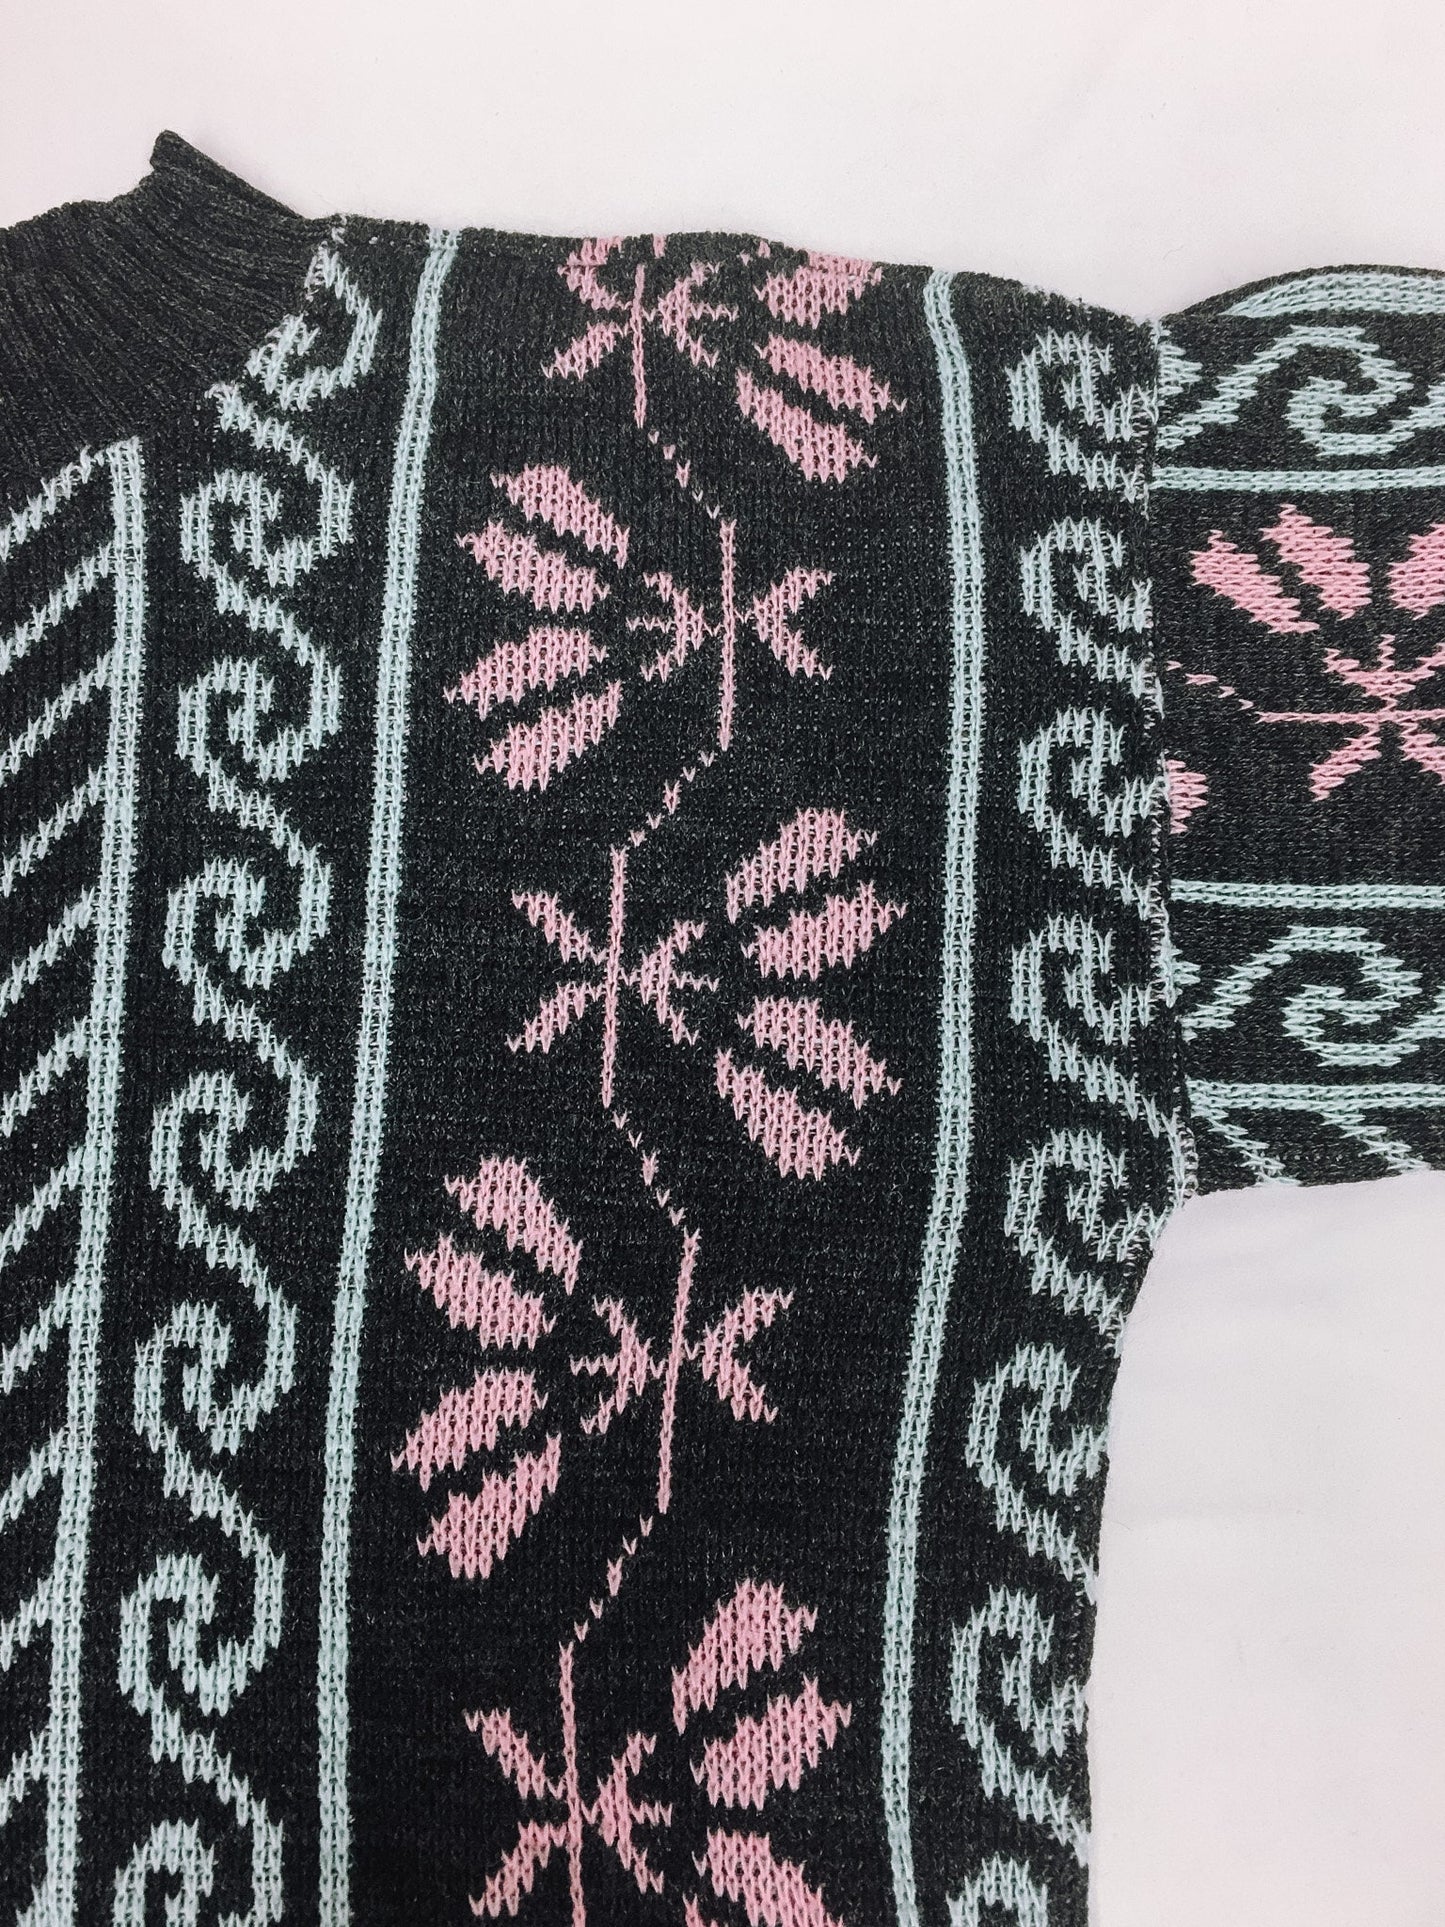 Vintage Cristina Gray Pastel Abstract Pattern Sweater, Vintage Crewneck Sweater